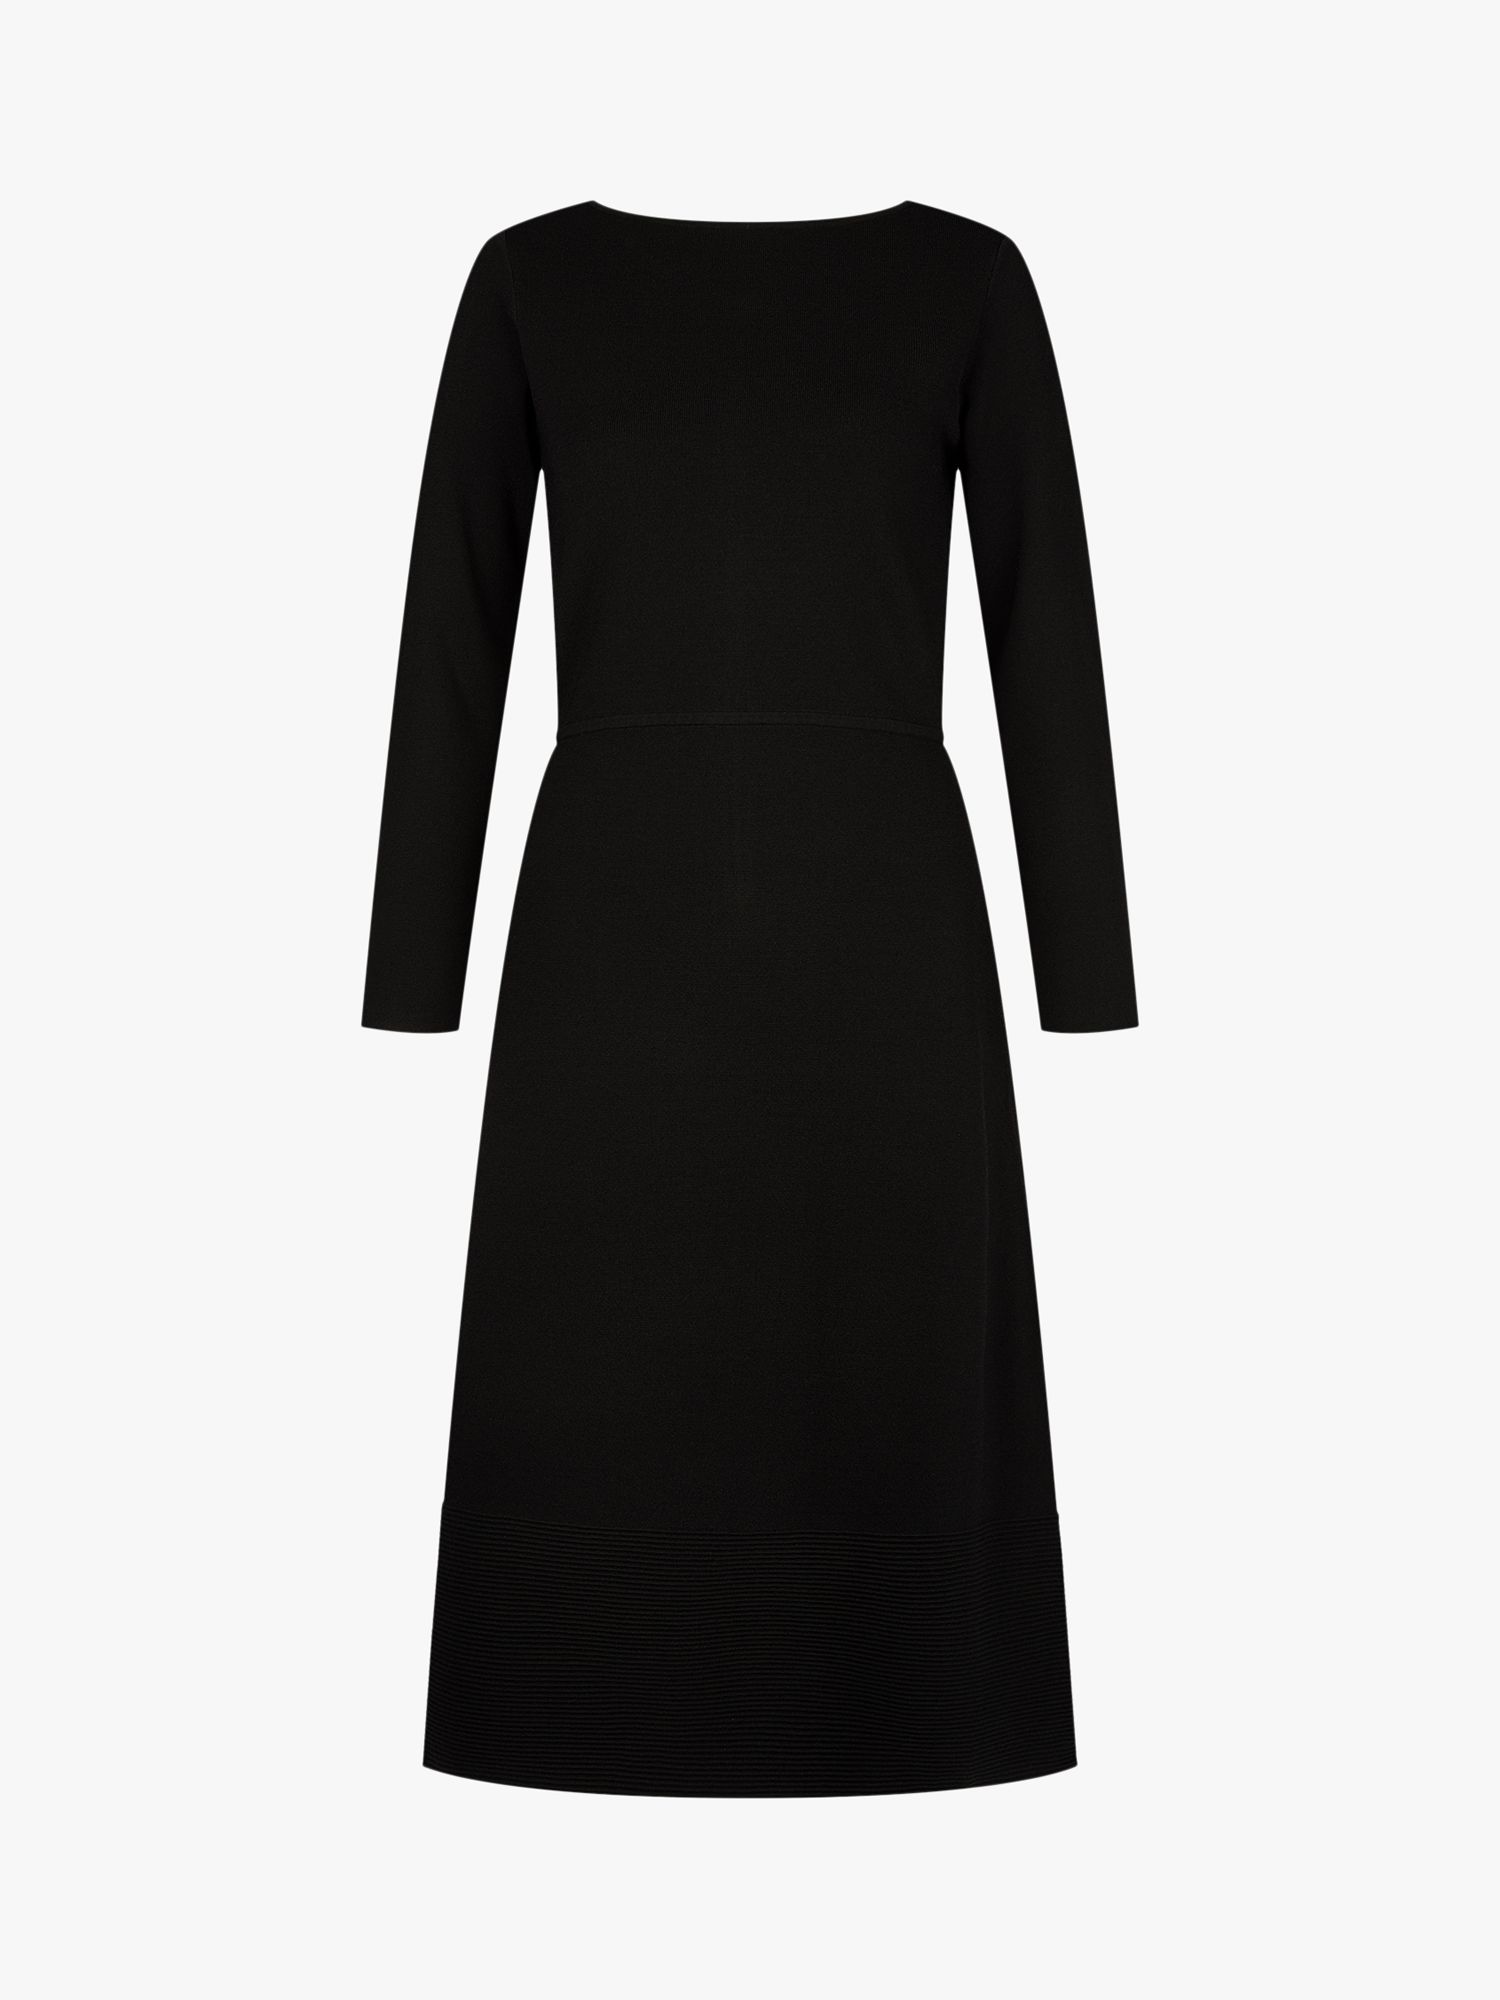 Hobbs Rebecca Knitted Dress, Black